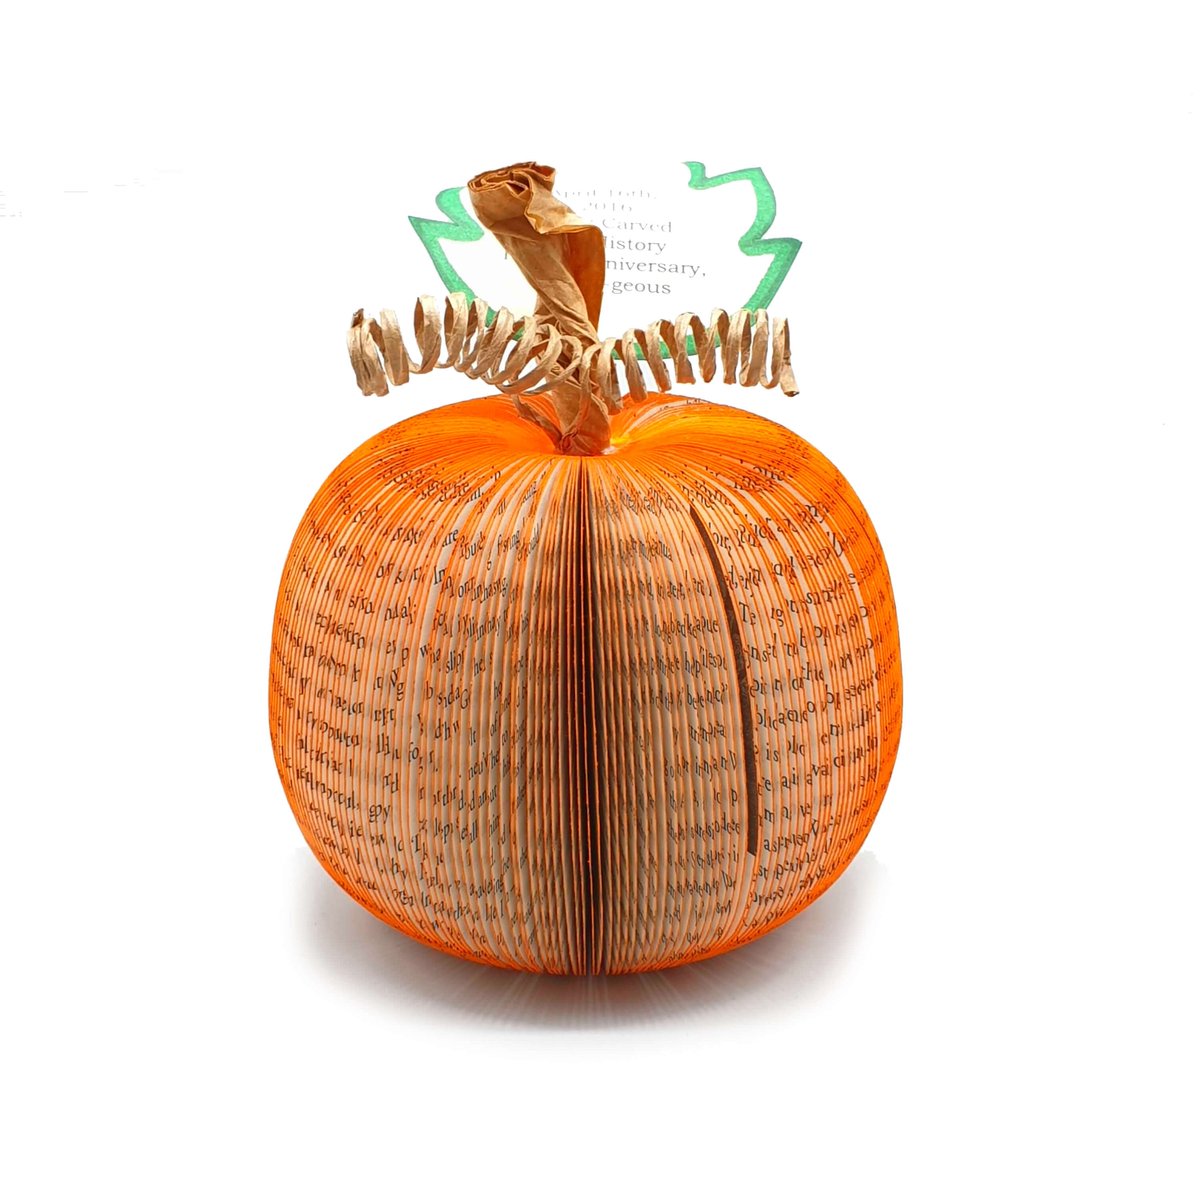 Pumpkin- Personalised Fall Gift - Autumn Wedding Gift - Autumn Decor - Paper Anniversary Gift - Autumn Fall Wedding Favours - Thanks giving creatoncrafts.etsy.com/listing/535794… #WomaninBiz #MHHSBD #EpiconEtsy #Handmade #CreatonCrafts #FallWedding